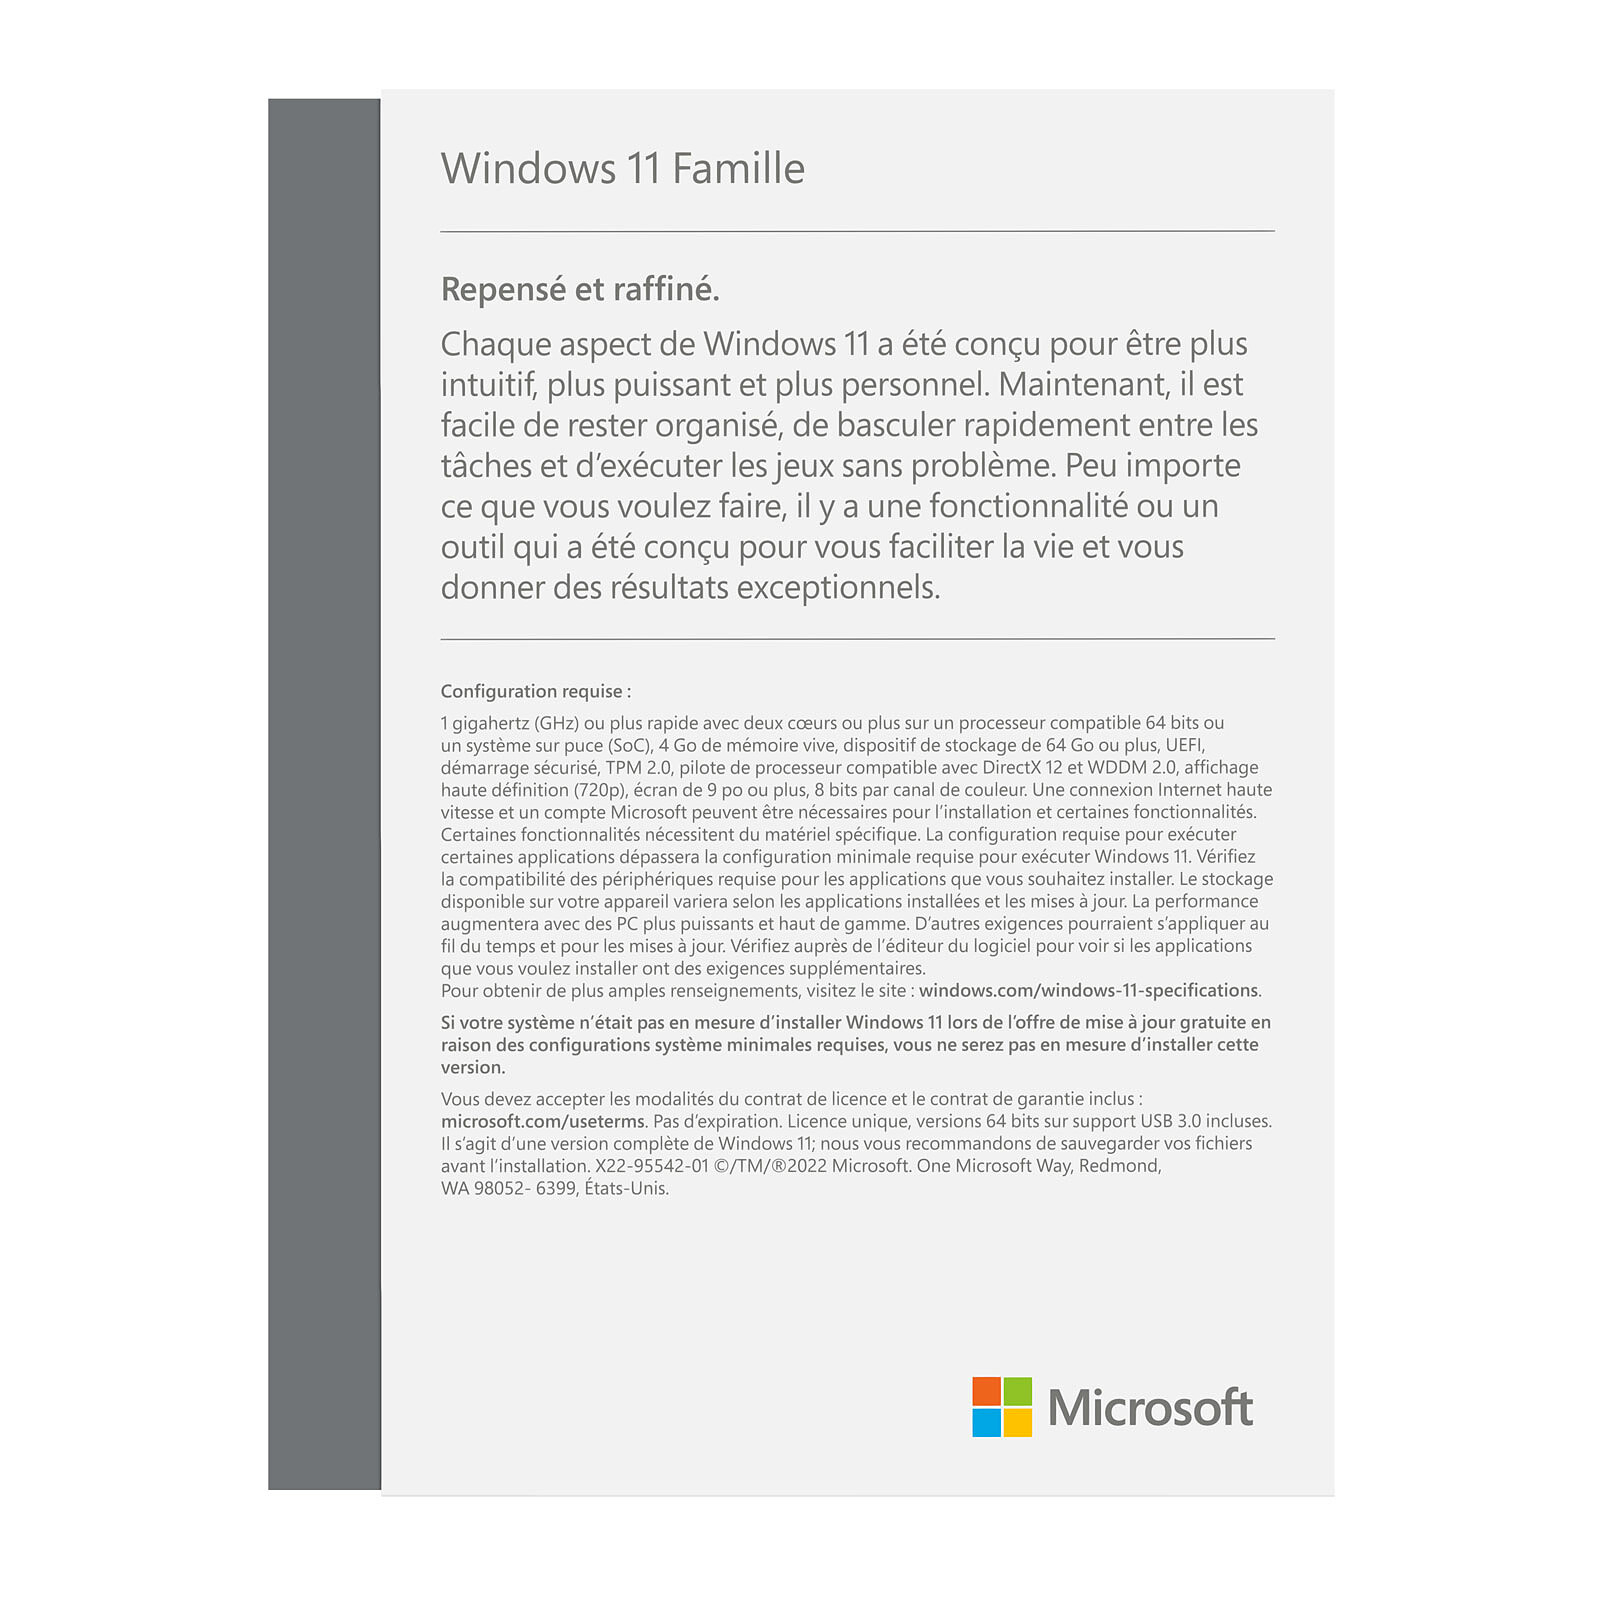 Acheter Windows 10 Pro Licence transférable